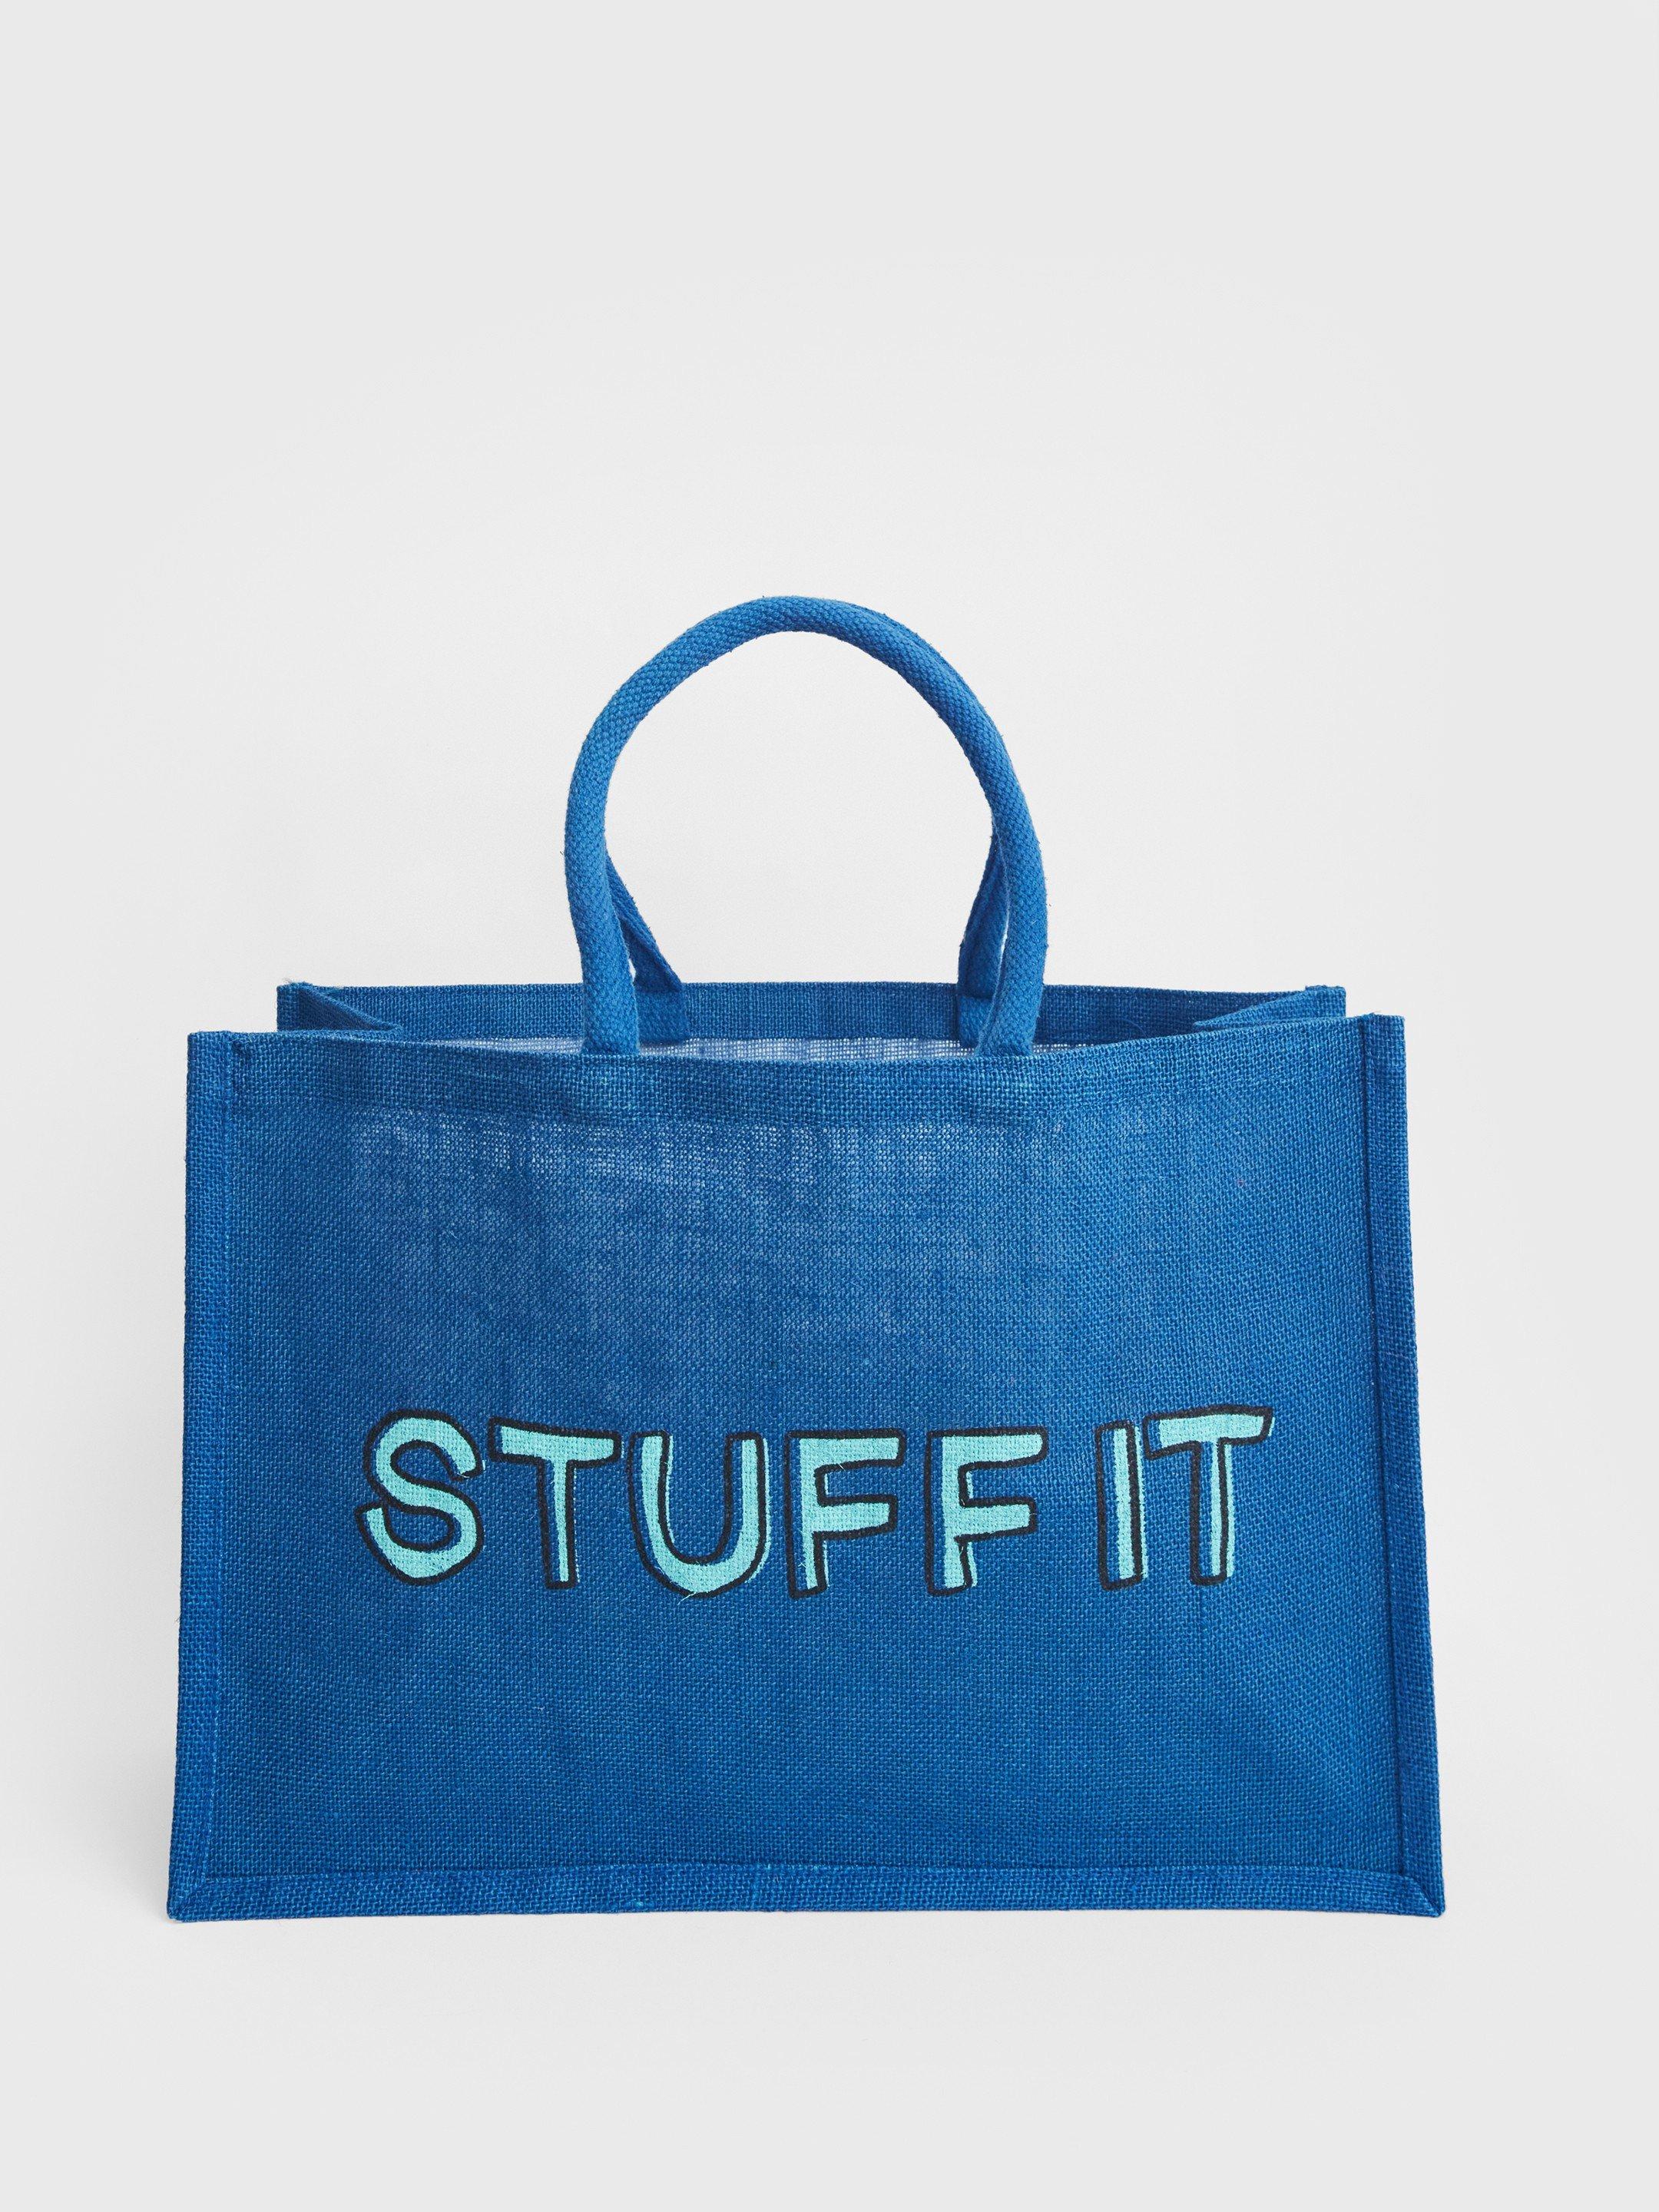 STUFF IT Bag in MID BLUE - FLAT FRONT